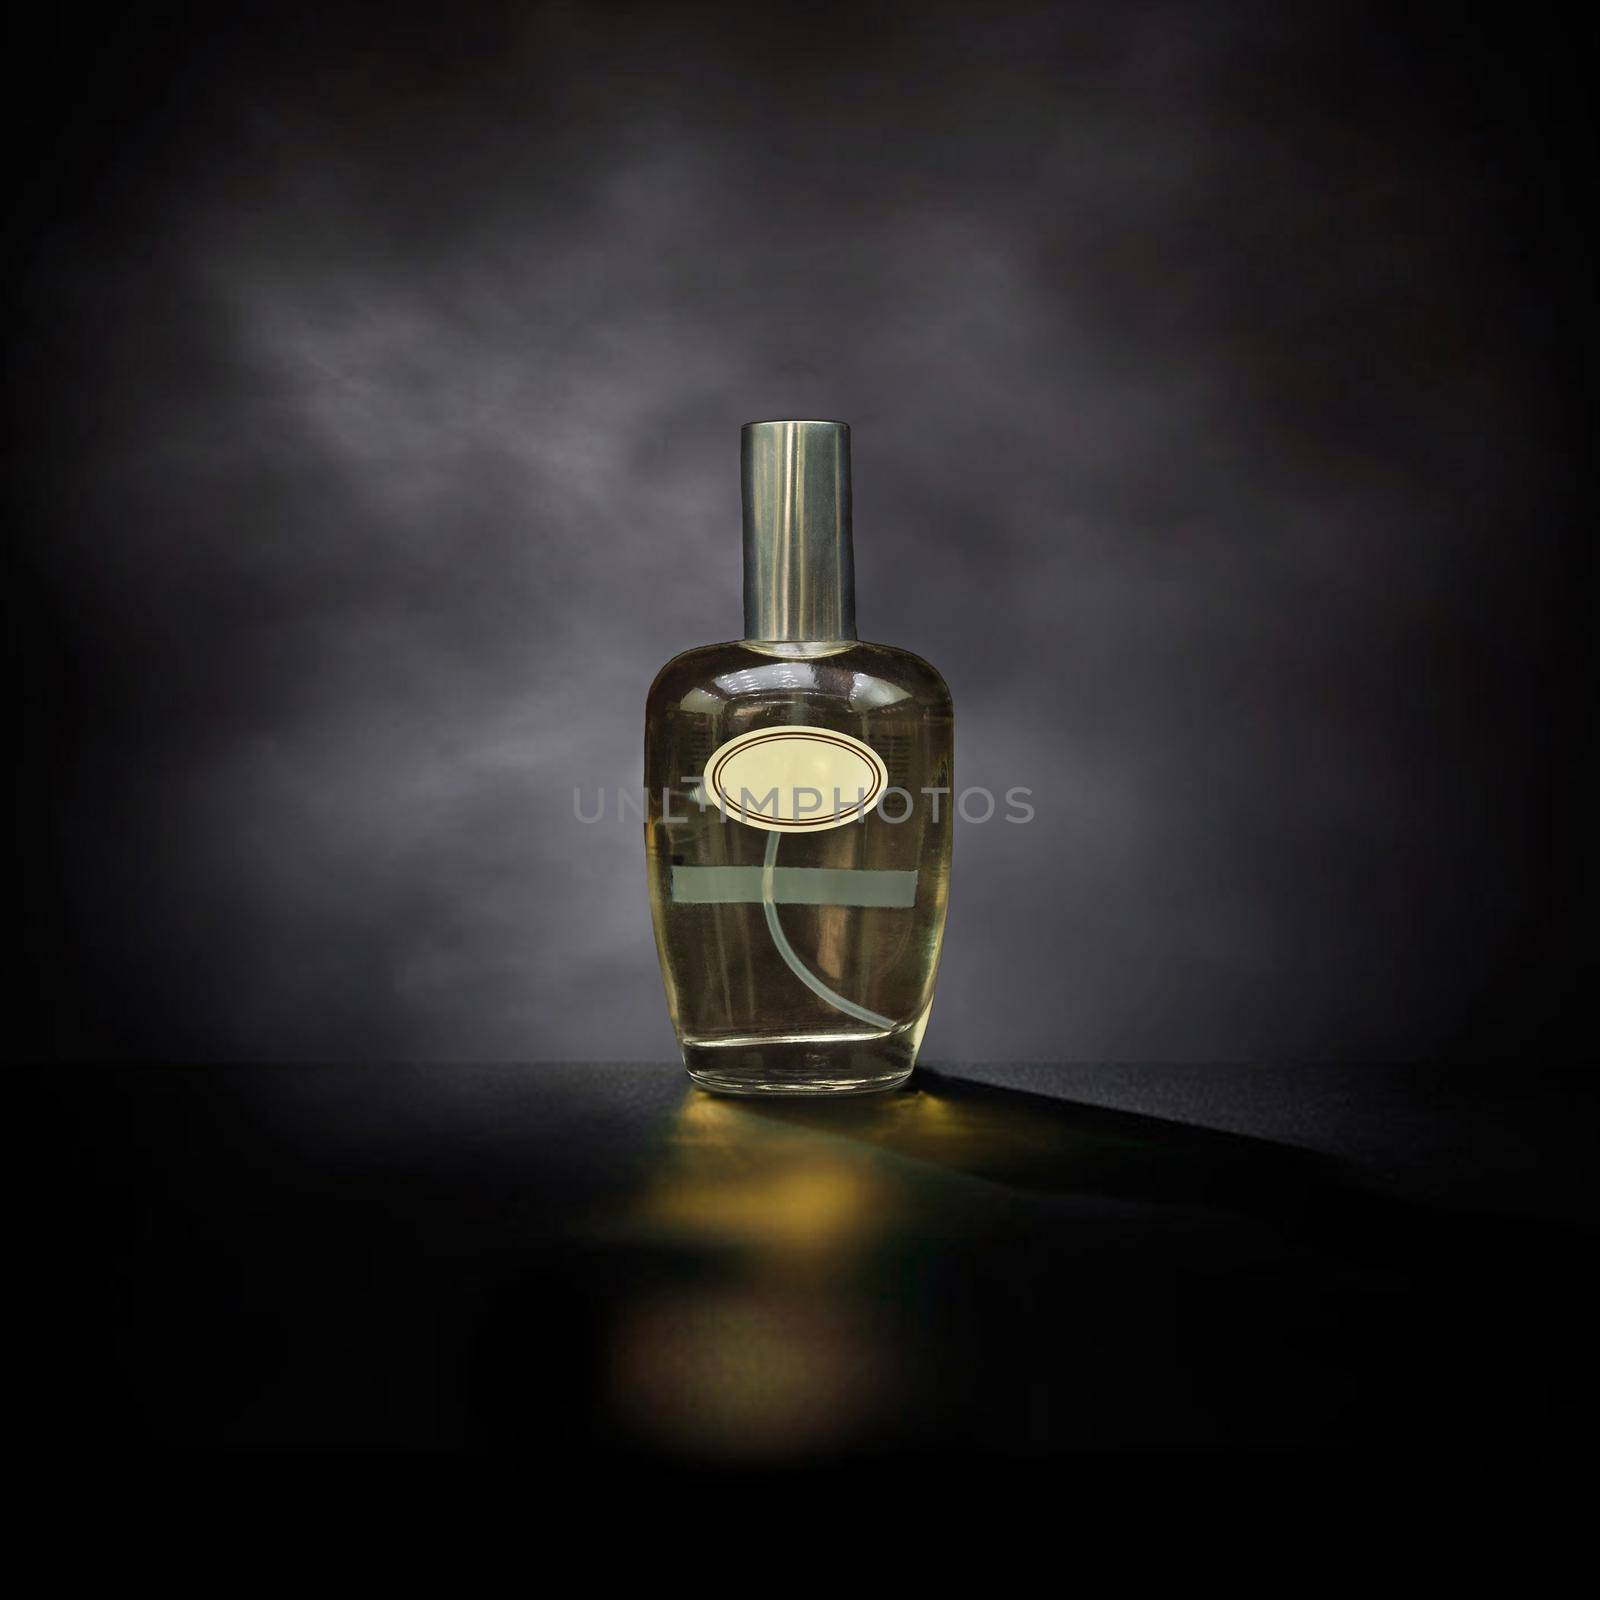 Perfume flacon abstract dark background